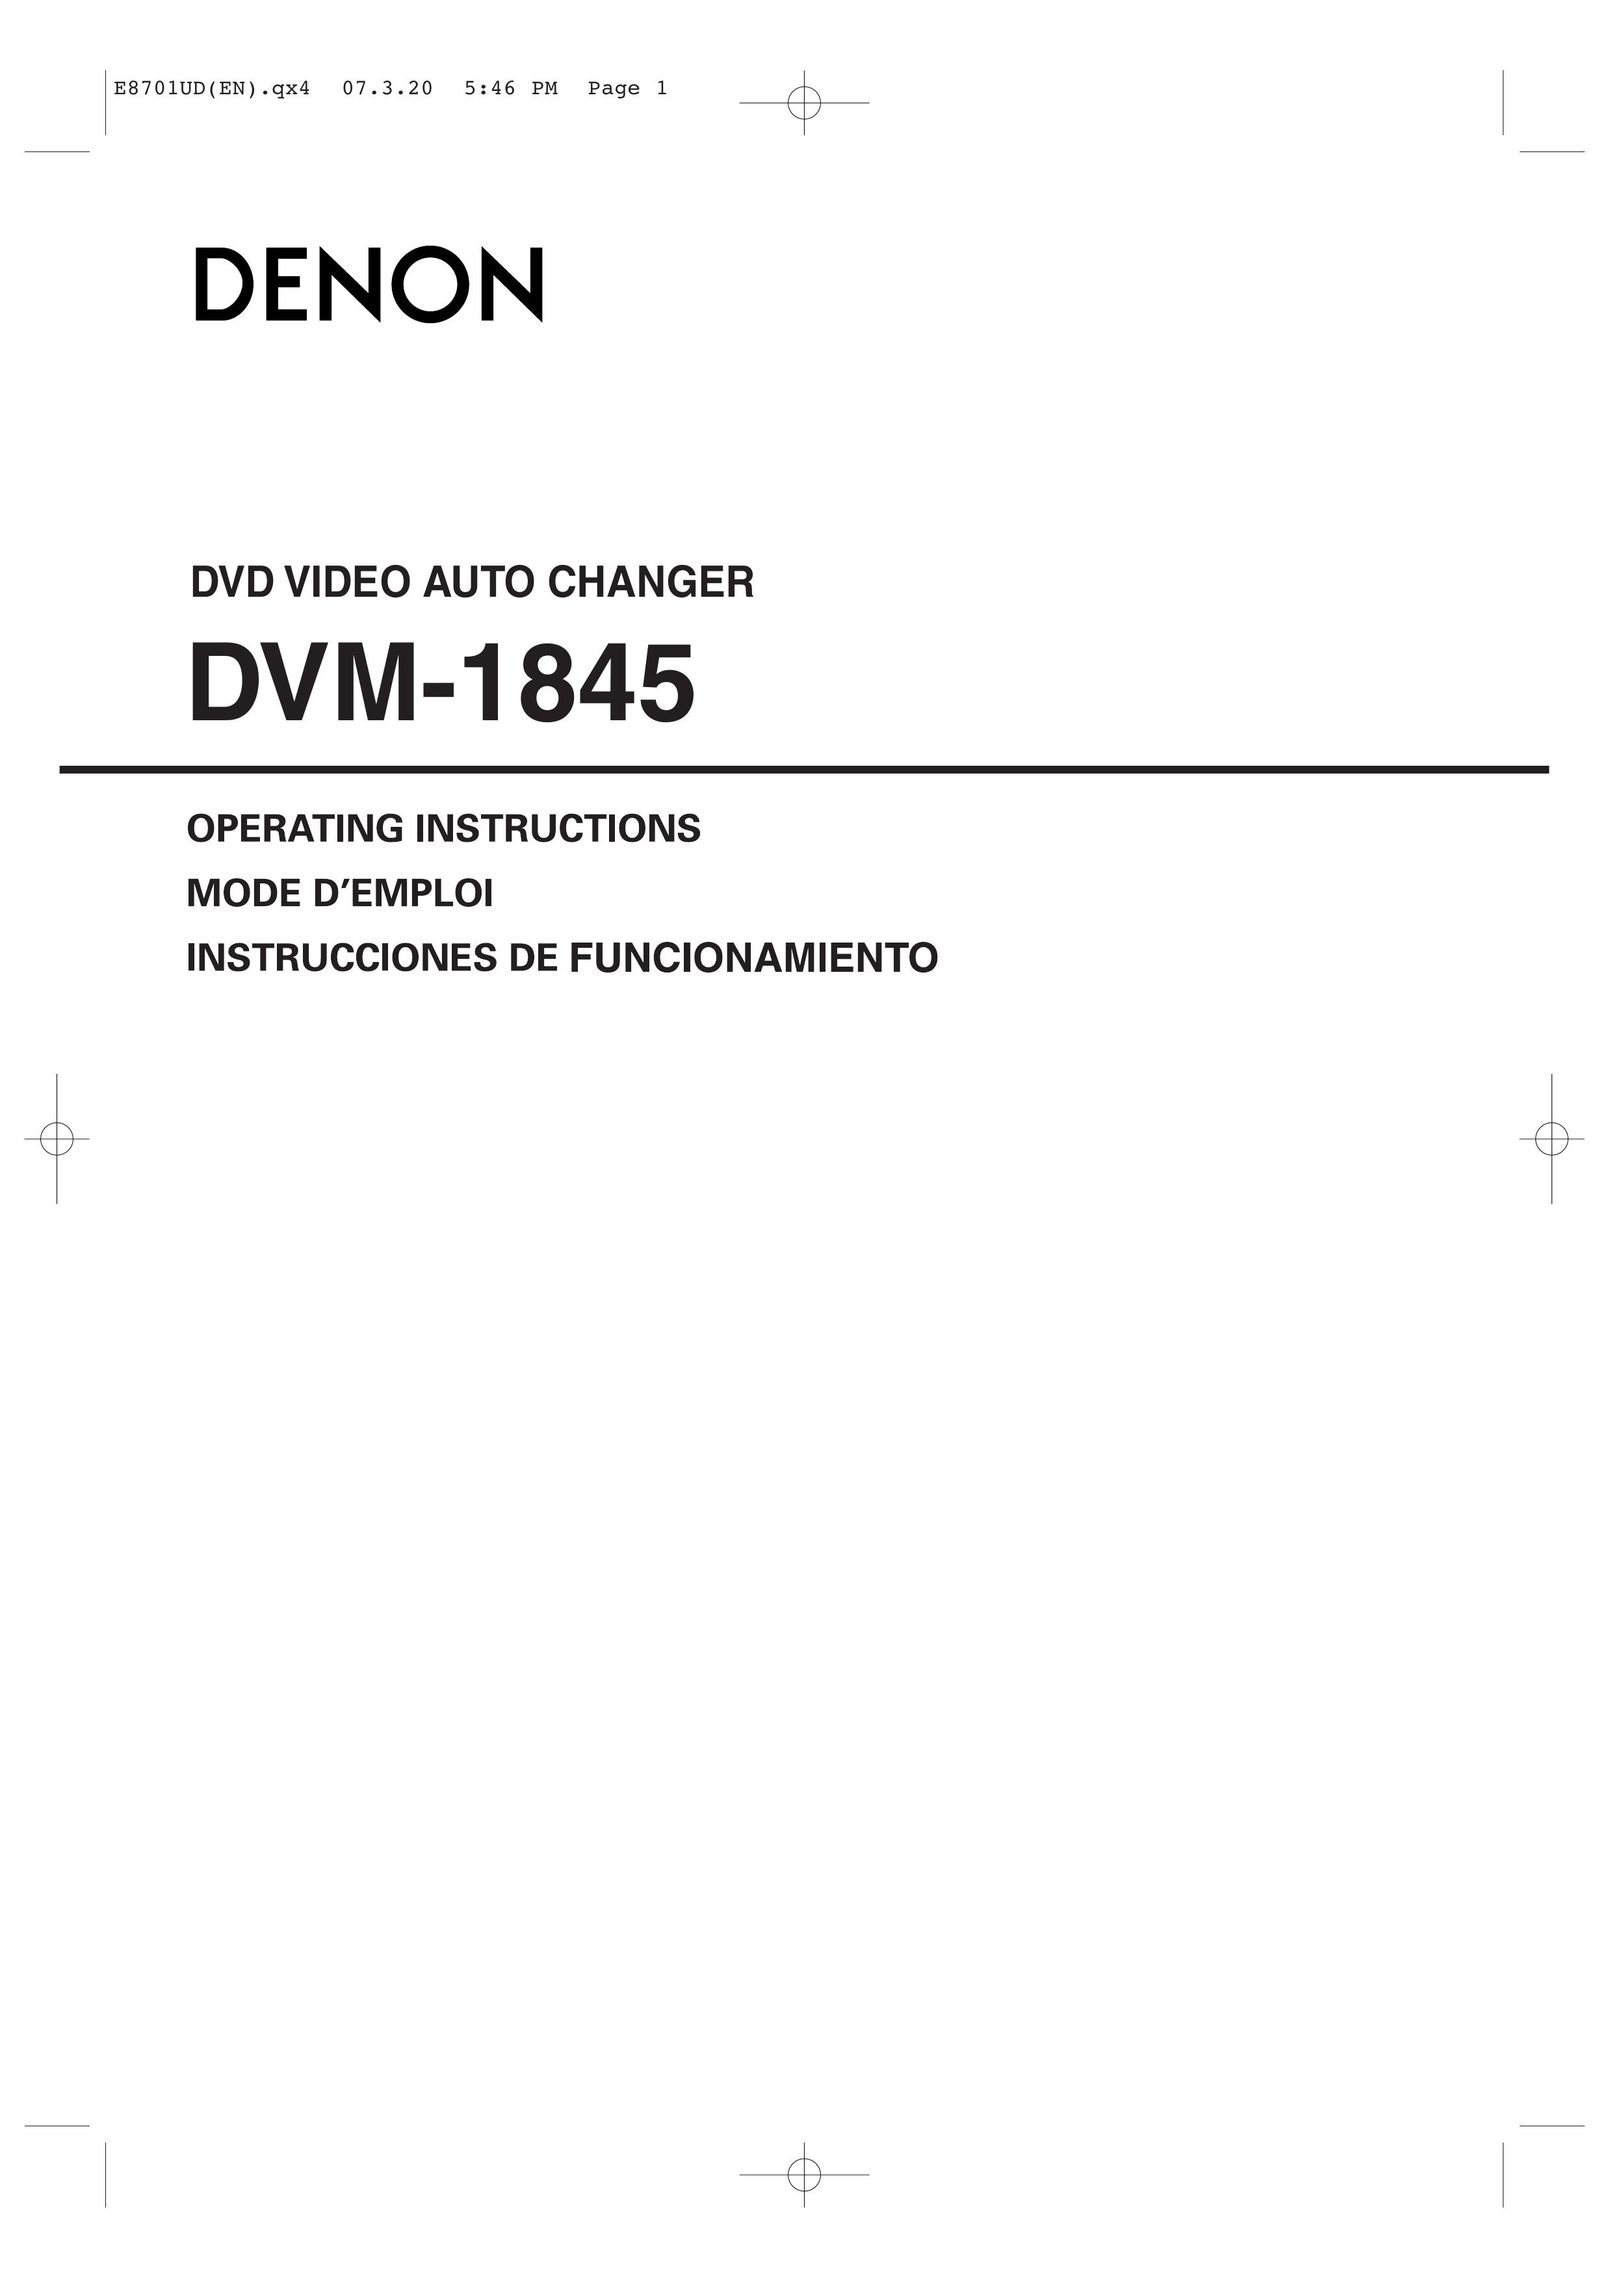 Denon DVM-1845 CD Player User Manual